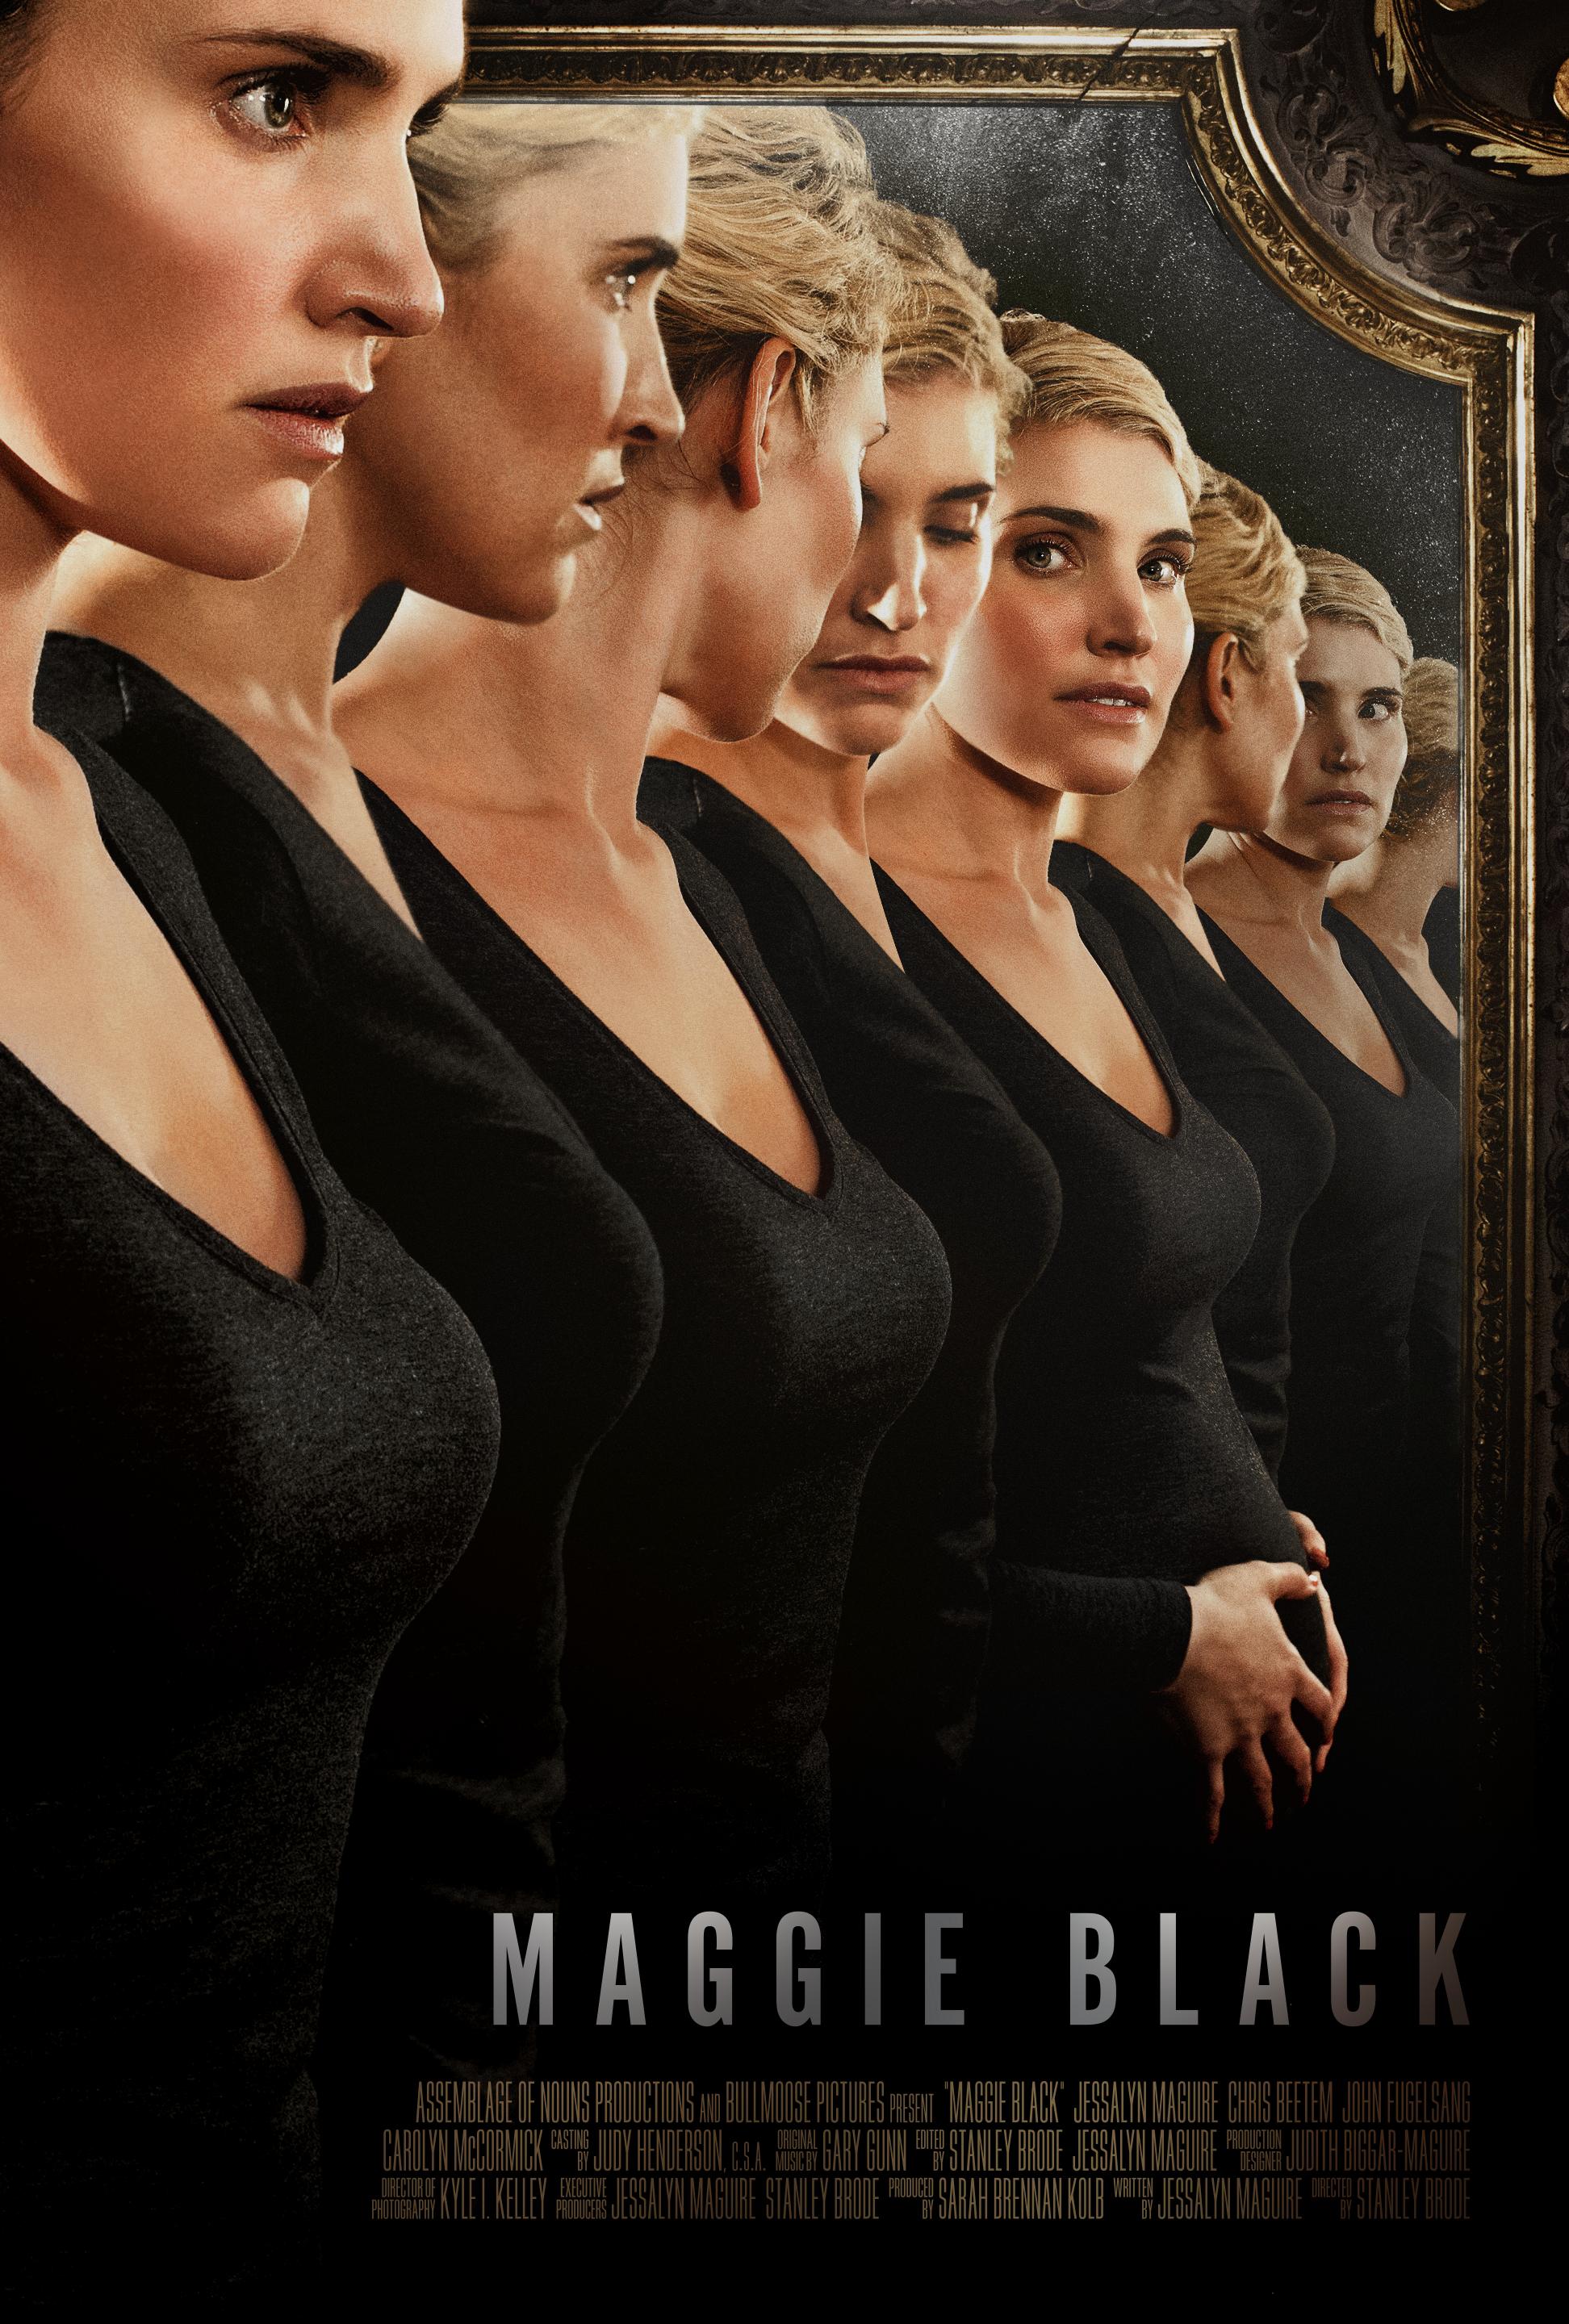 Nonton film Maggie Black layarkaca21 indoxx1 ganool online streaming terbaru